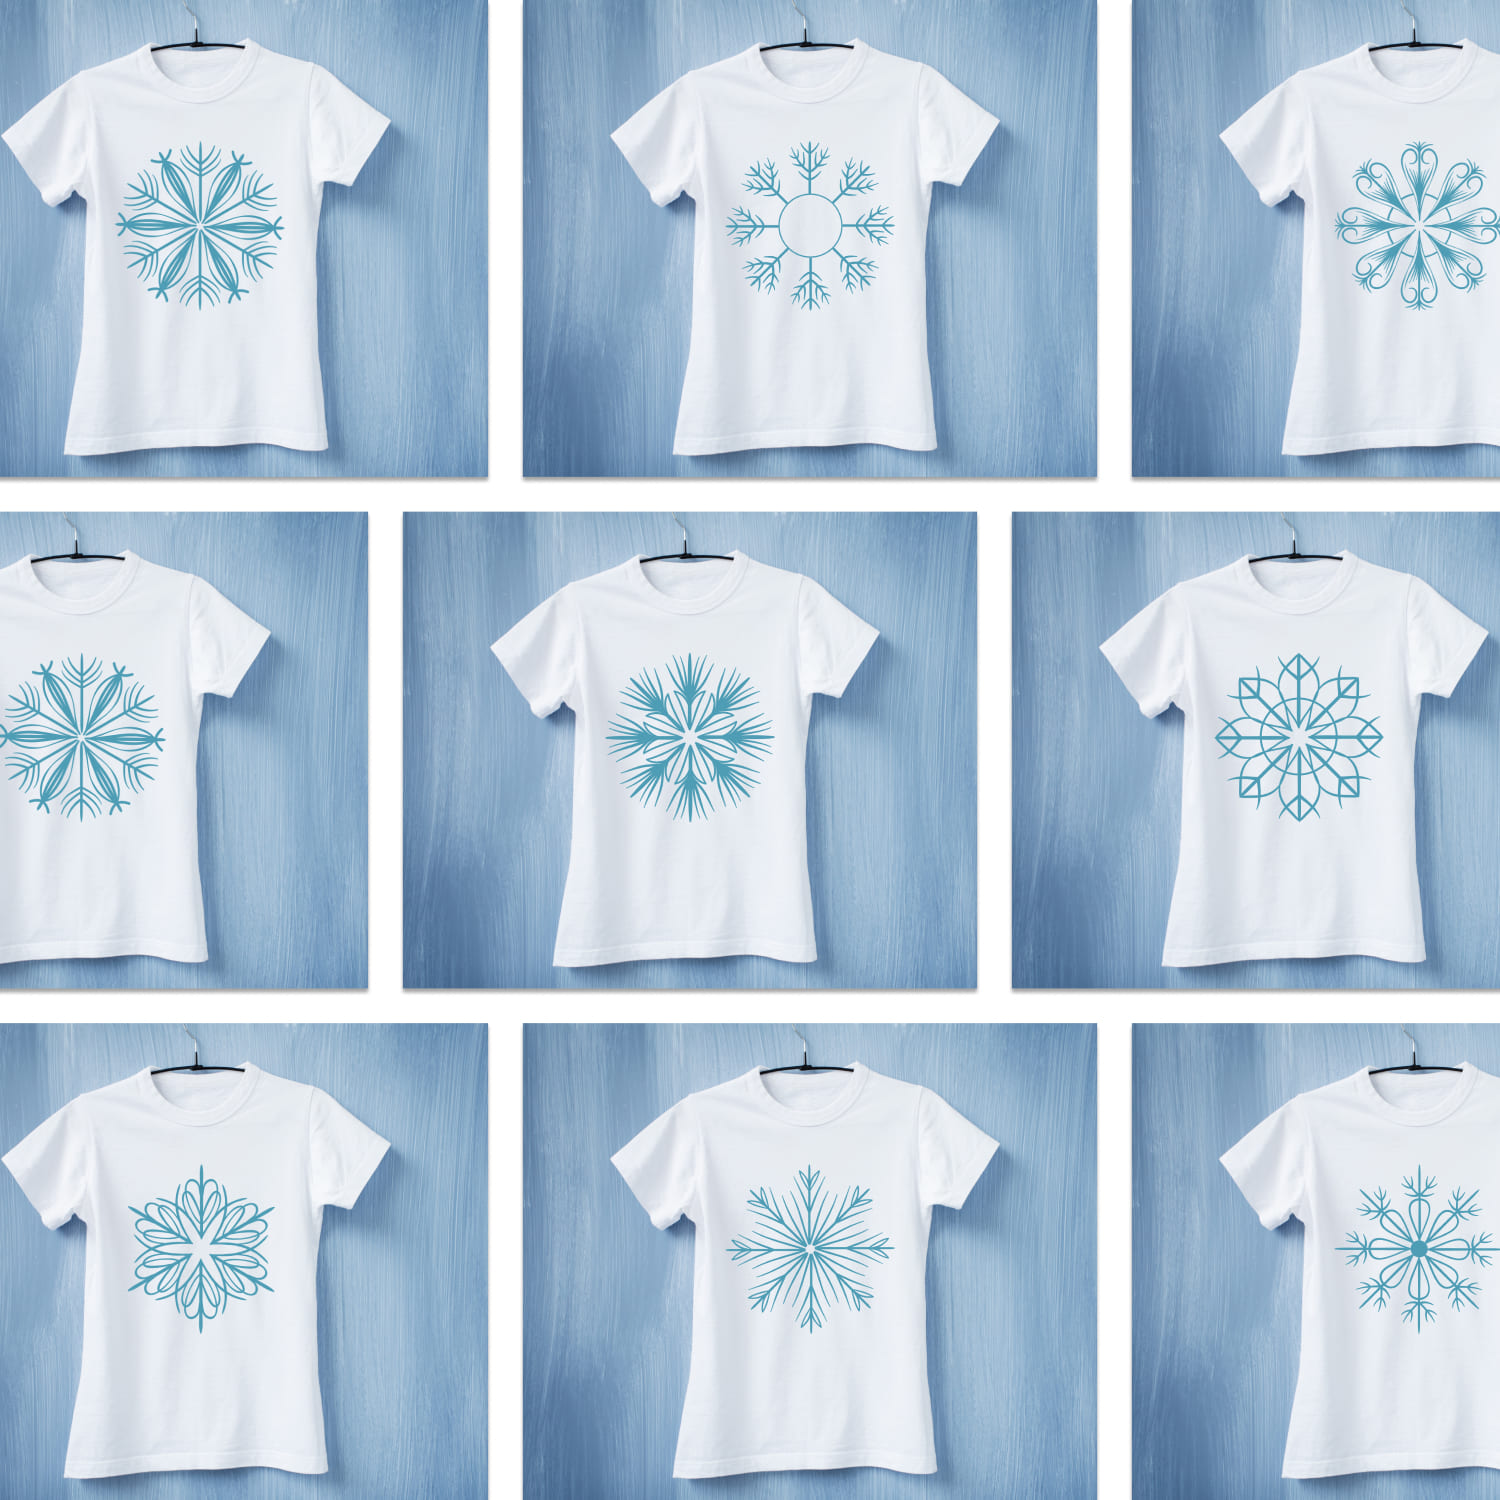 Snowflake Ornament SVG T-shirt Designs cover.